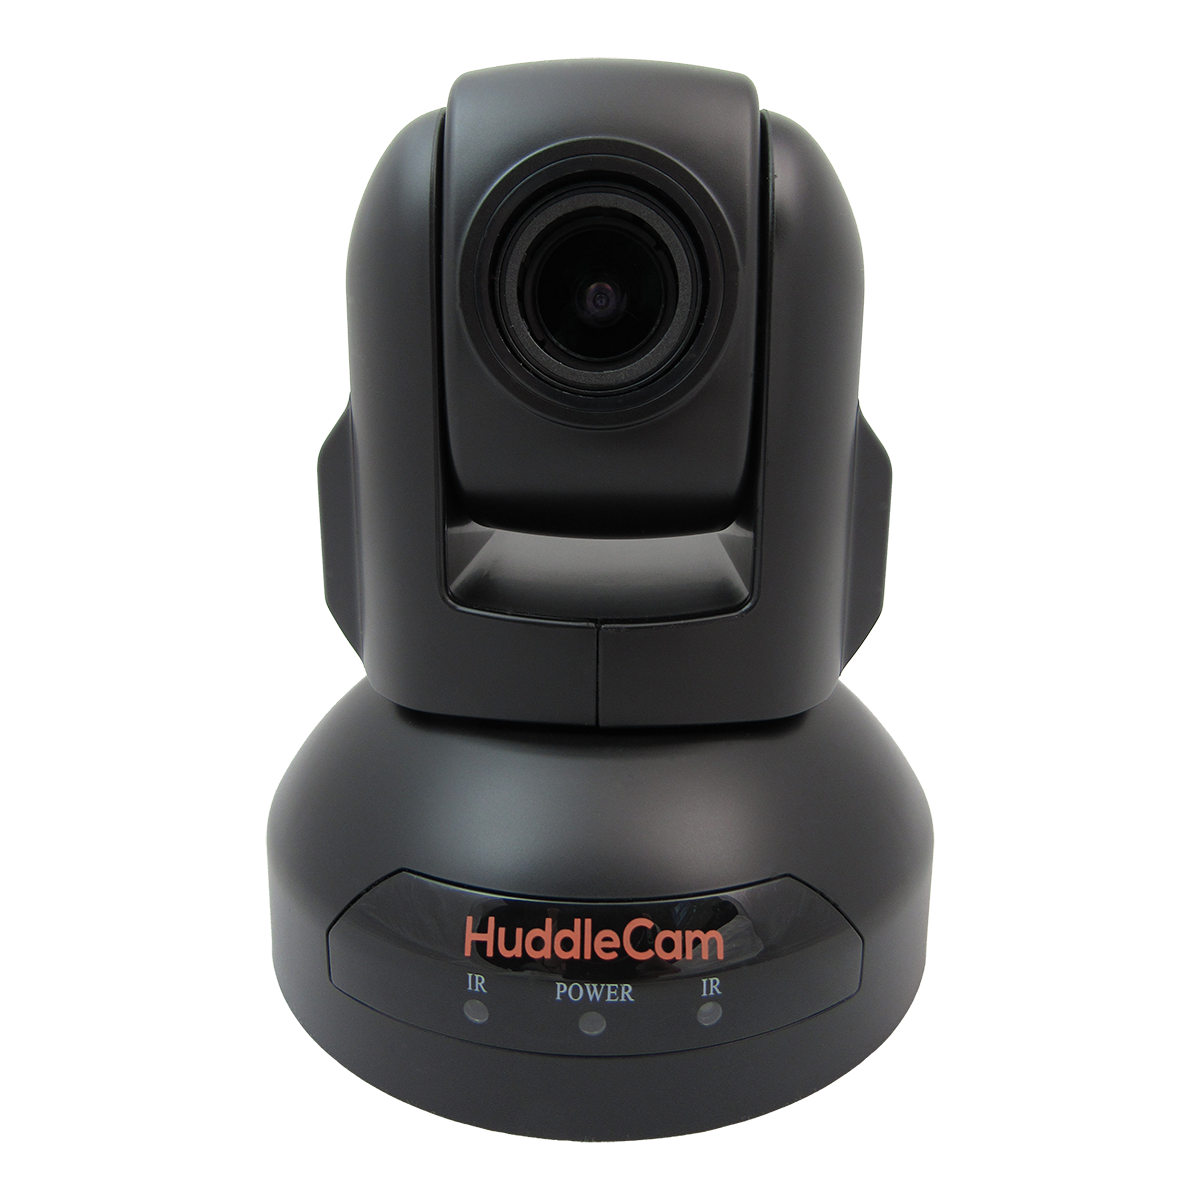 HuddleCamHD 3x Optical Zoom PTZ USB Camera, Black